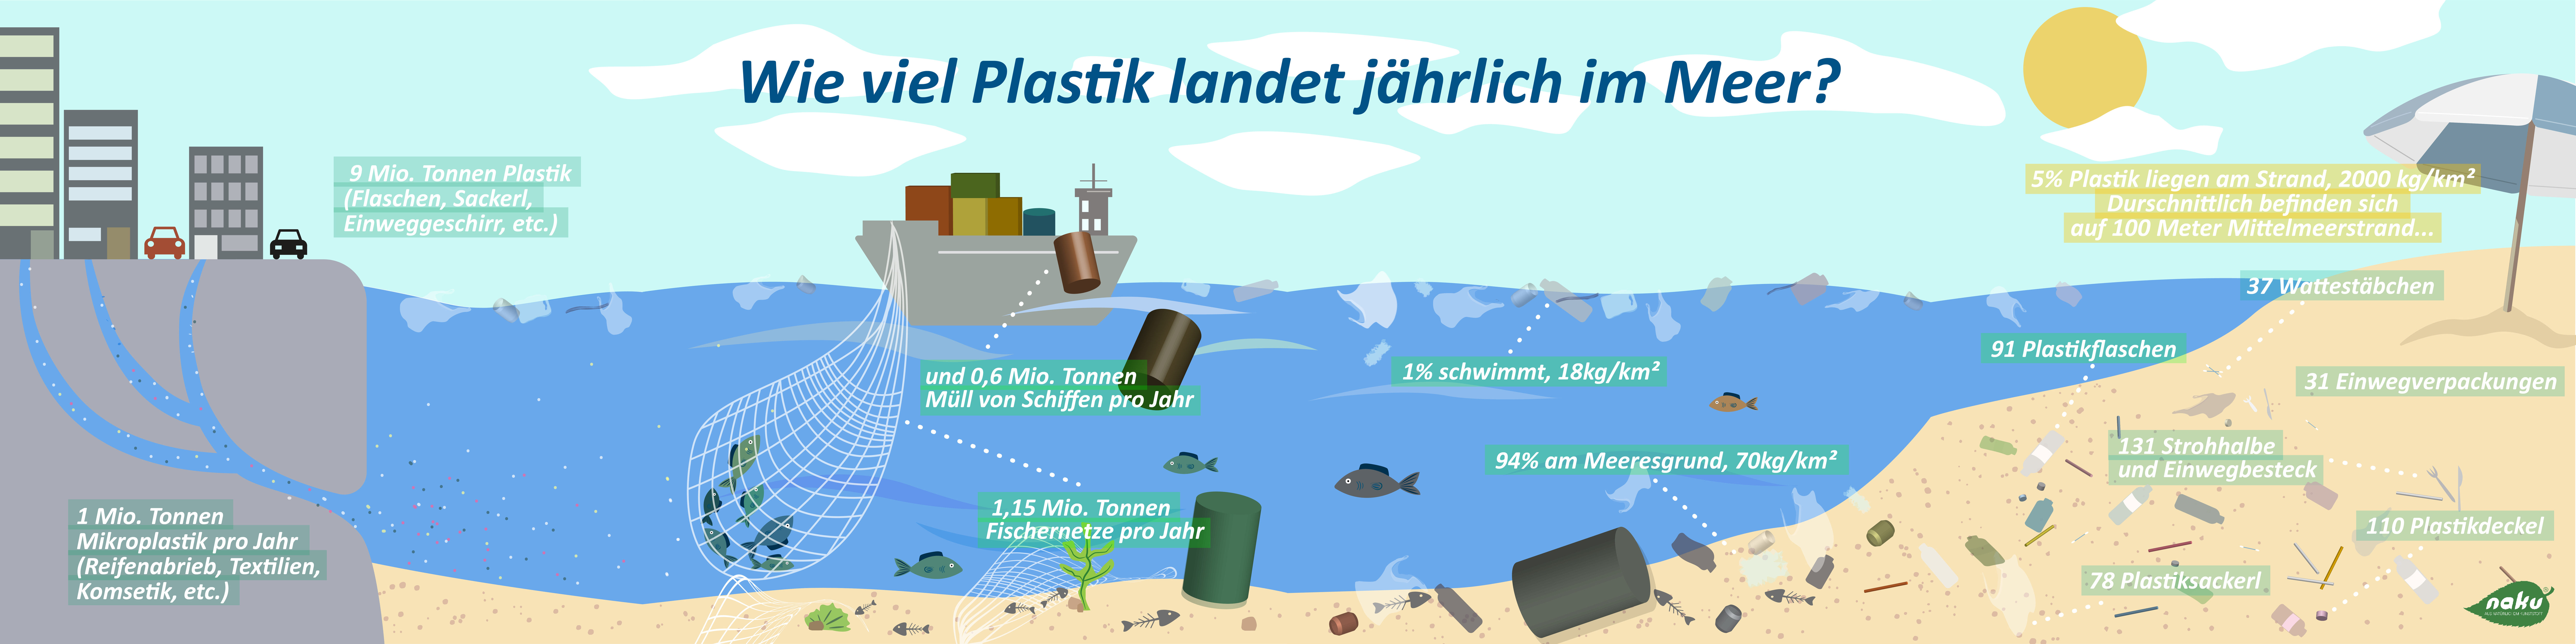 Infografik: Wie viel Plastik landet jährlich im Meer?